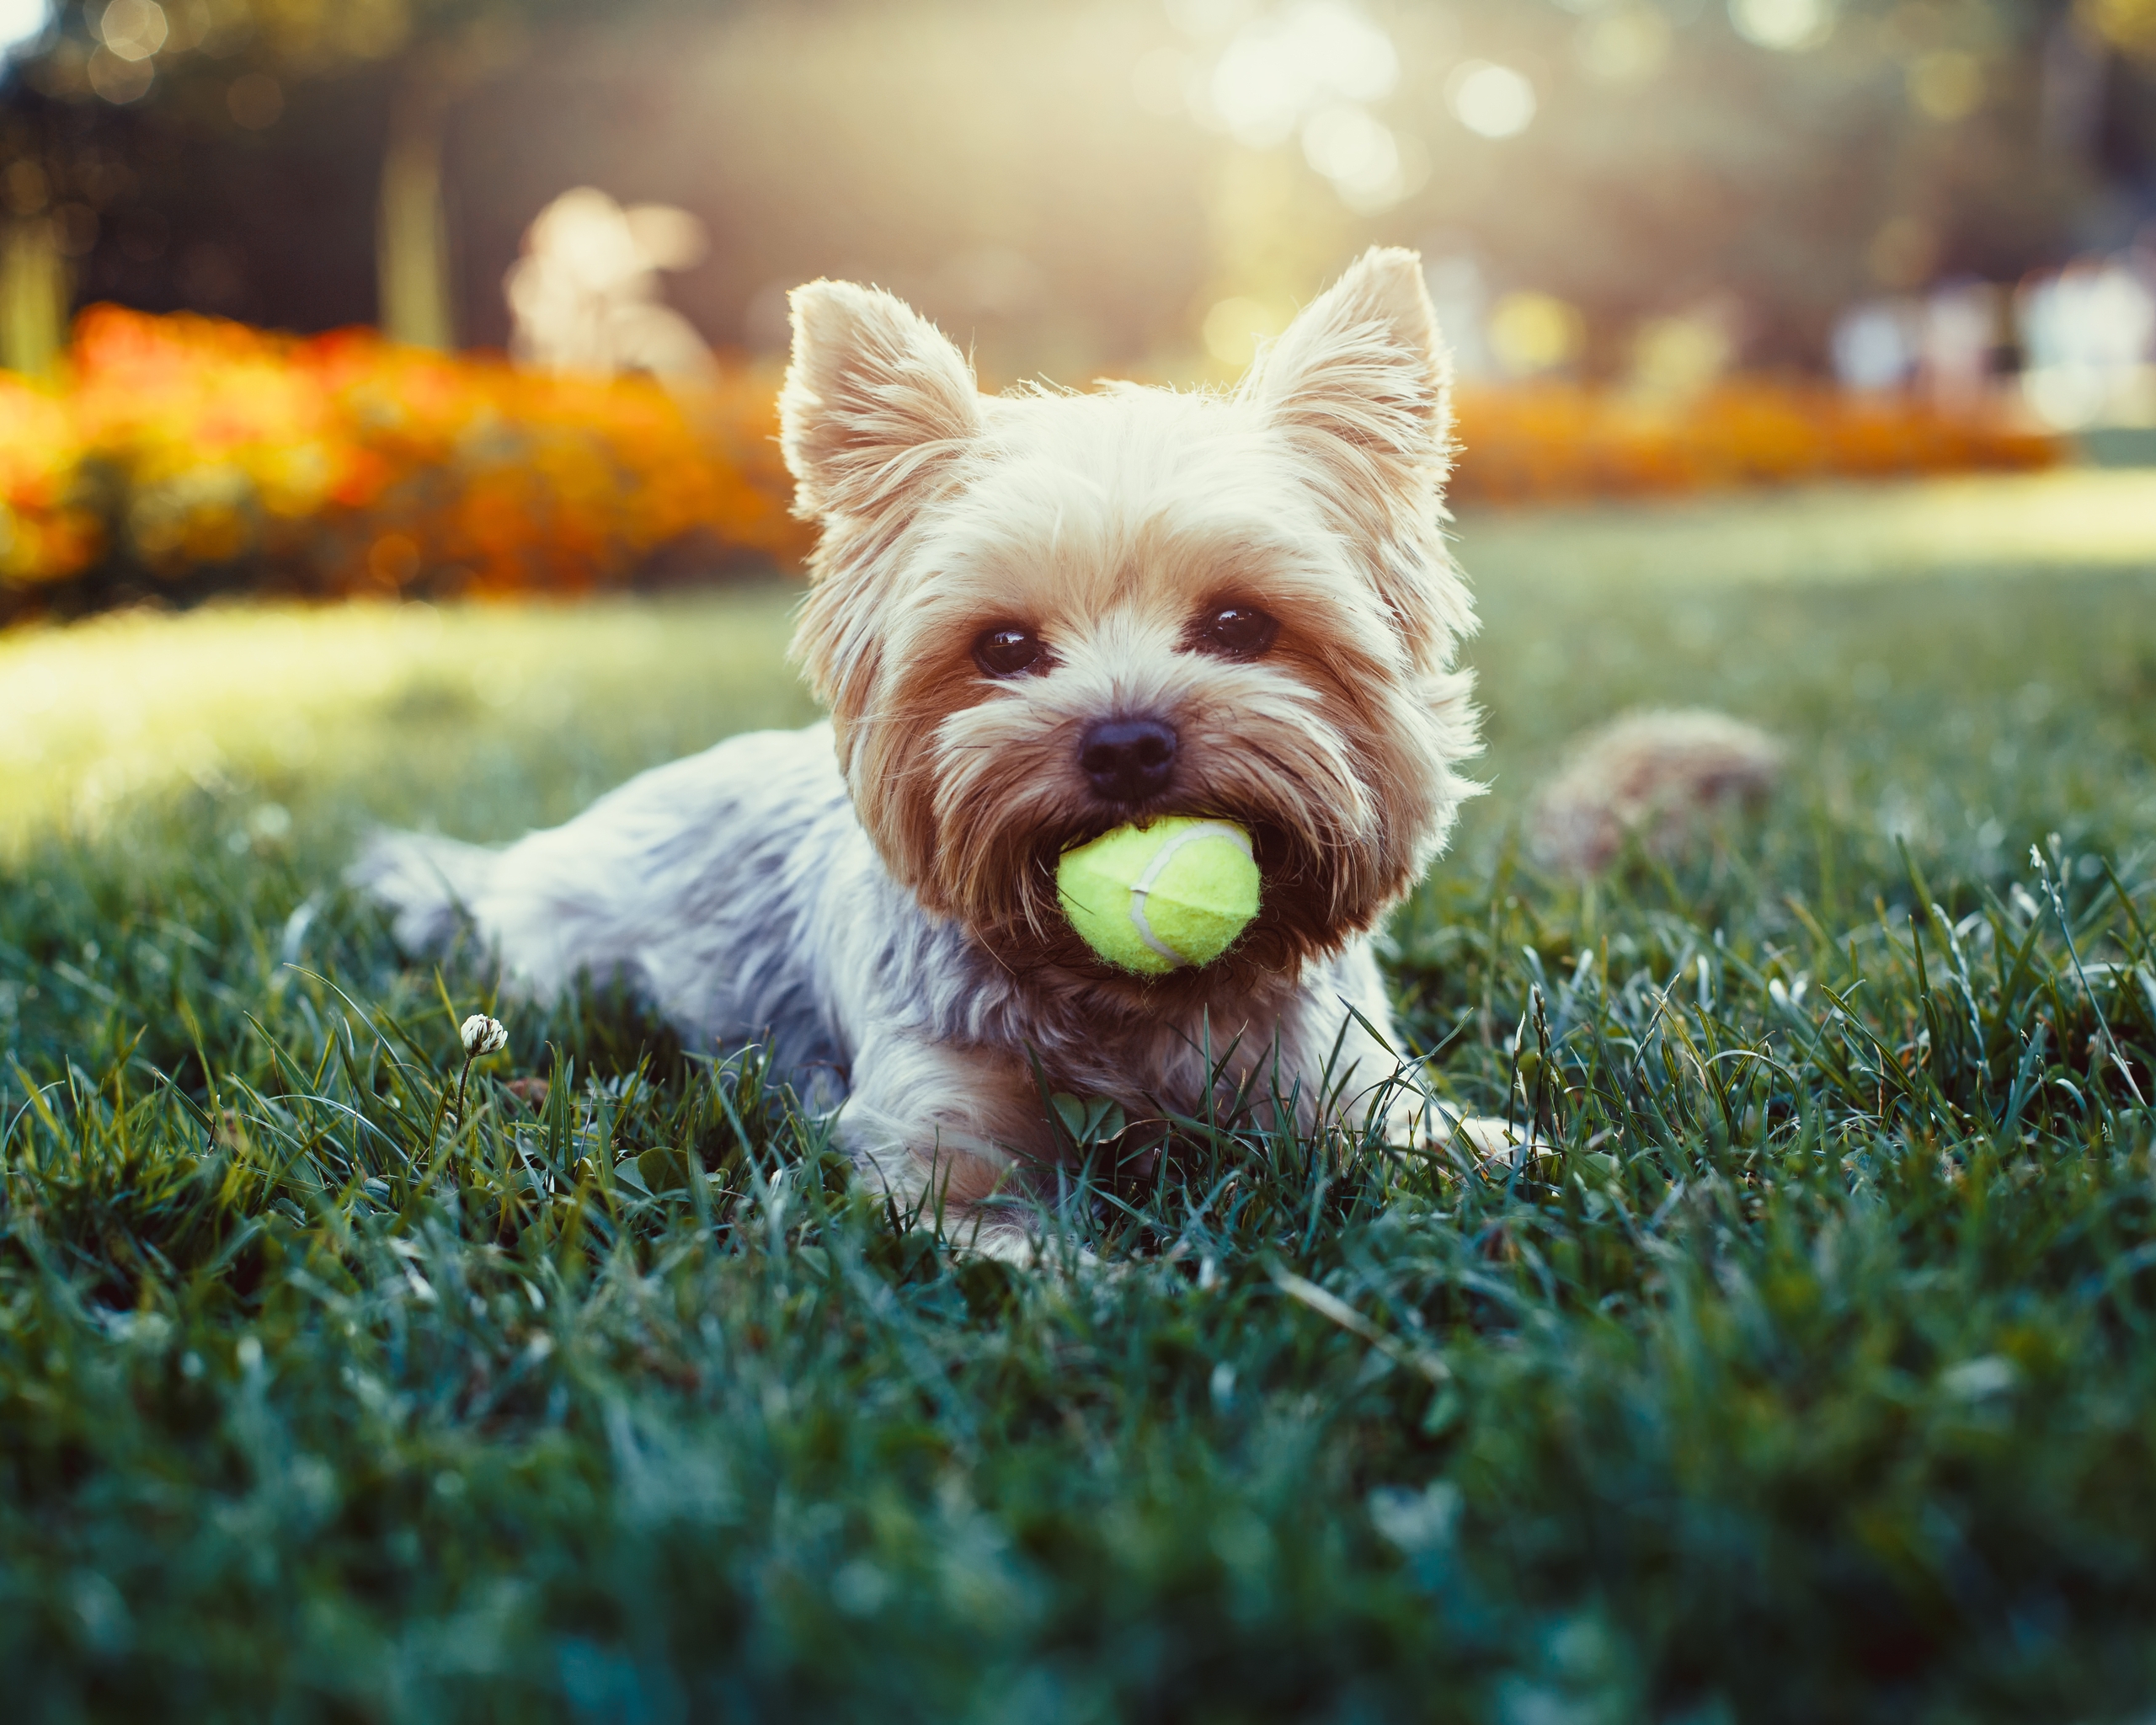 Image: Dog, purebred, ball, grass, lawn, play